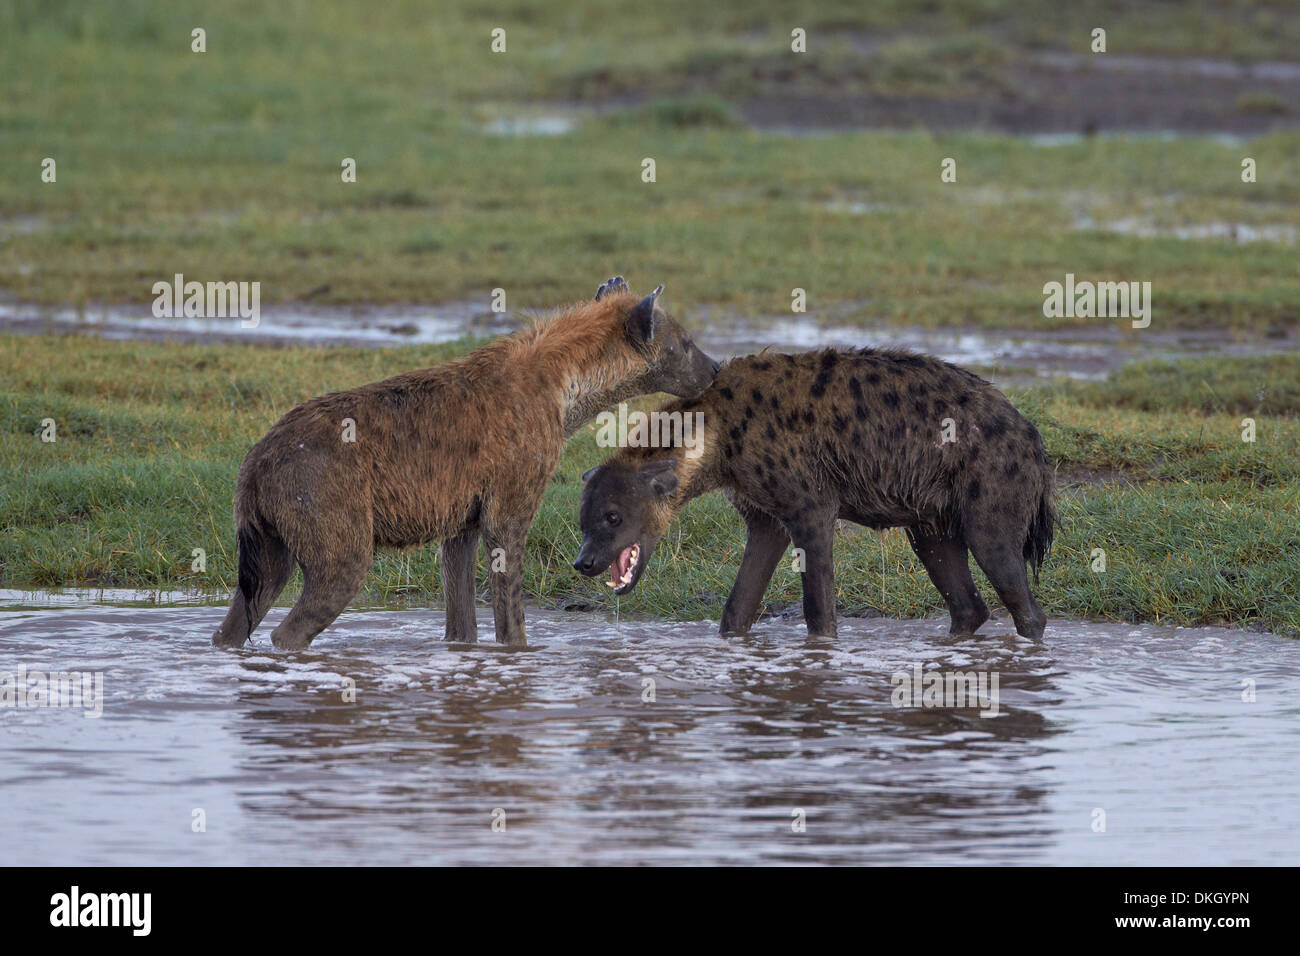 Two spotted hyena (spotted hyaena) (Crocuta crocuta), Serengeti National Park, Tanzania, East Africa, Africa Stock Photo